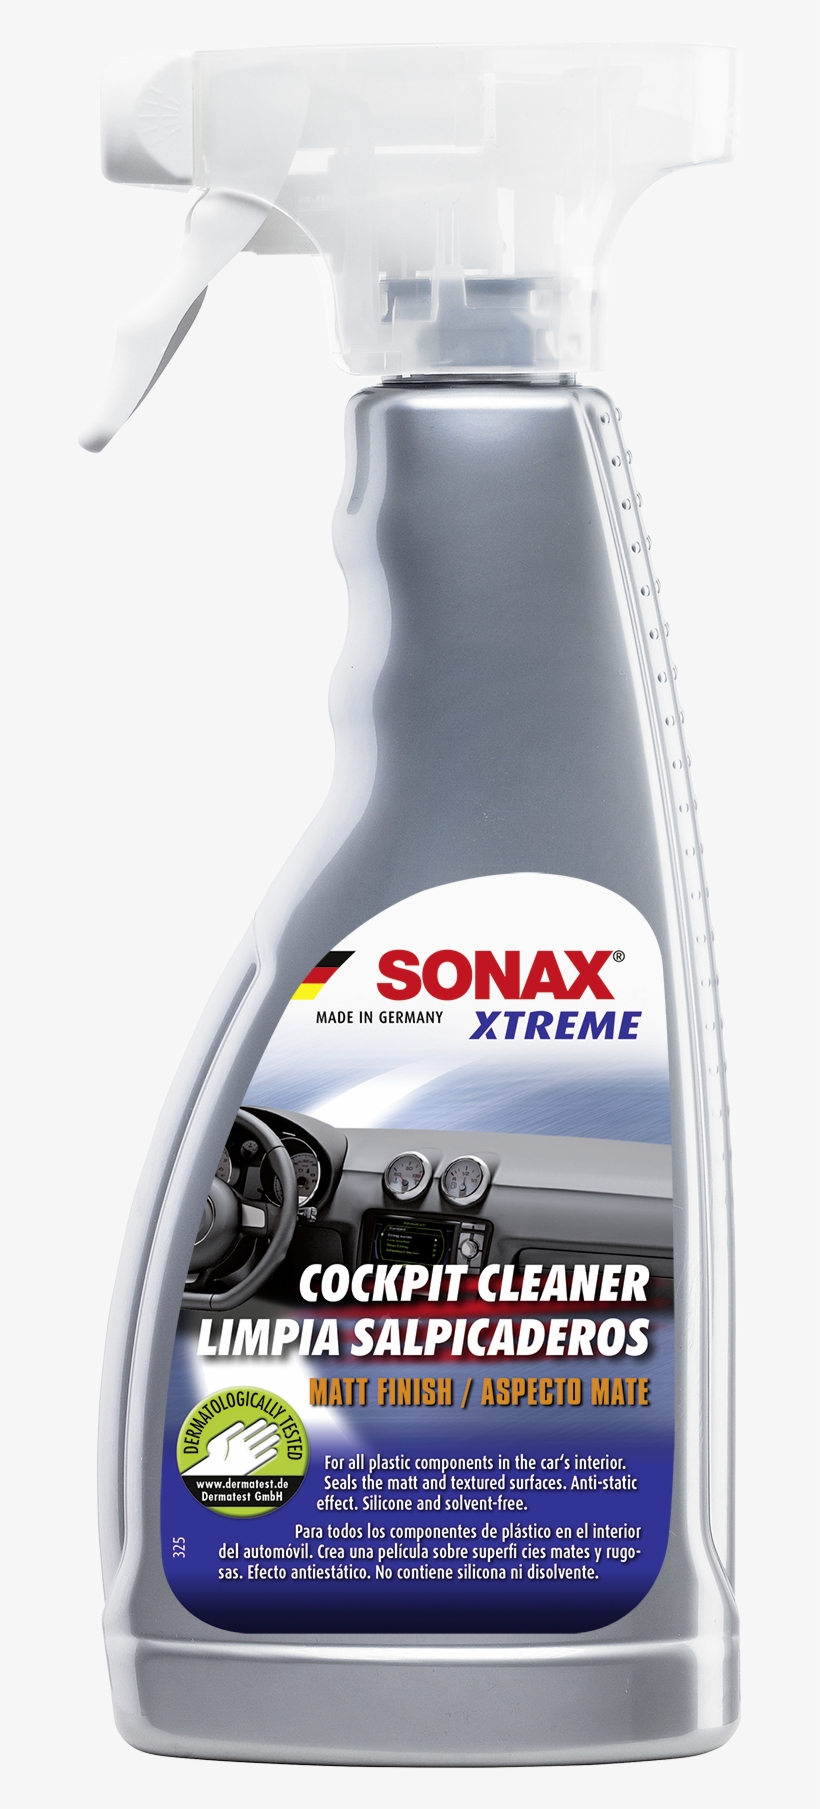 Sonax Xtreme Cockpit Cleaner Matt Finish - Sonax Xtreme Cockpit Cleaner, transparent png #5100552